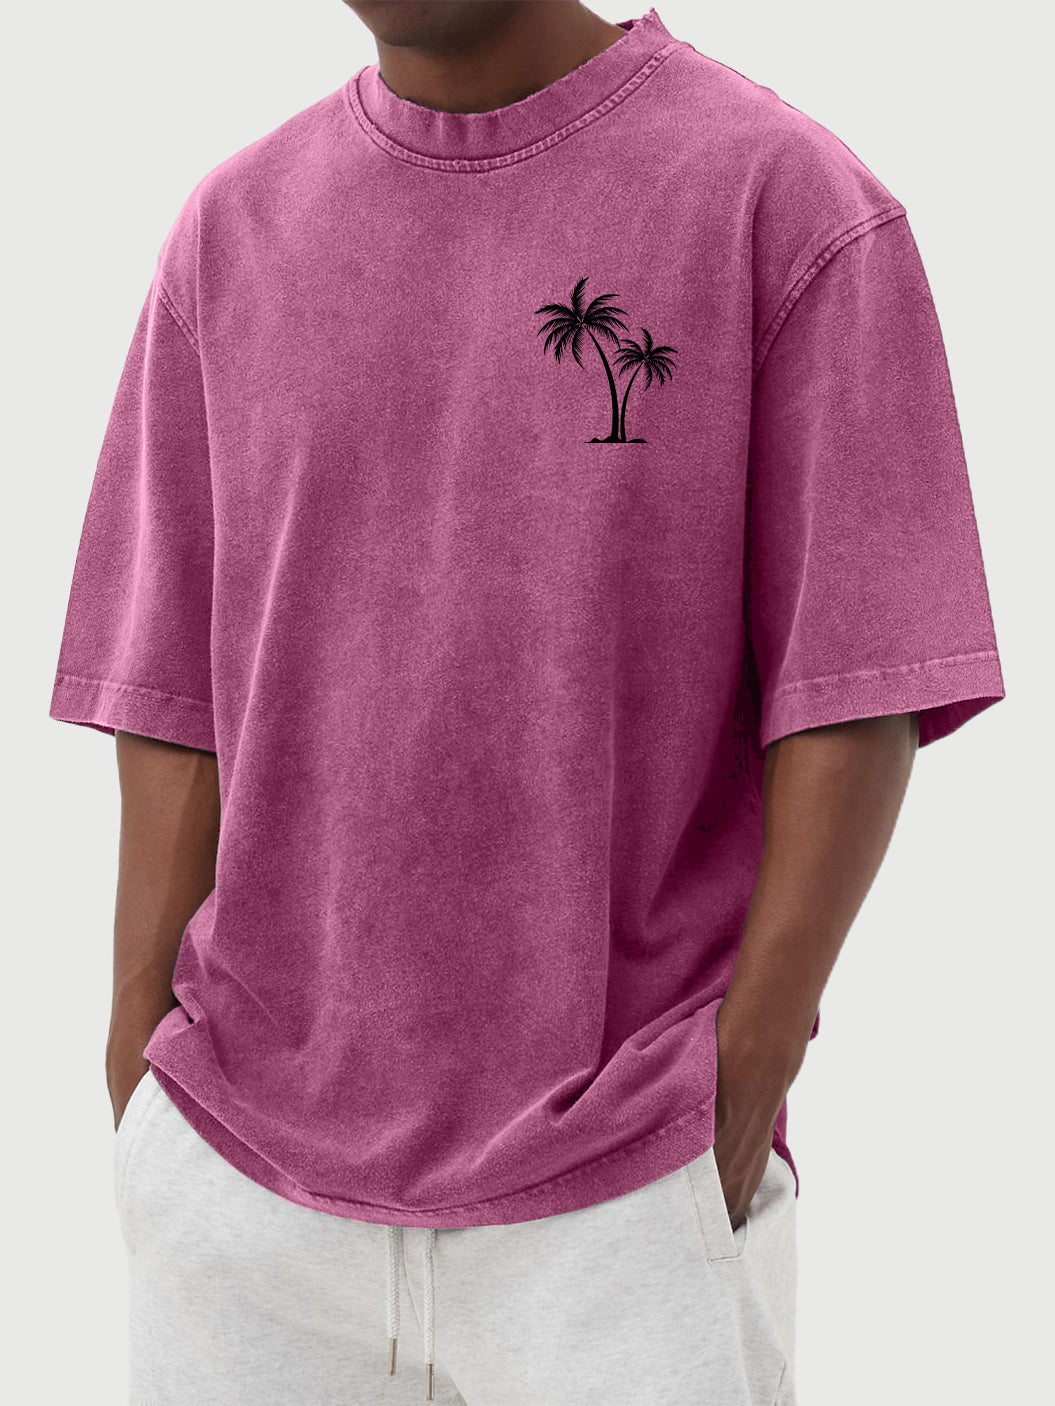 Men's Vintage Washed Palm Tree Print Short Sleeved Round Neck T-shirt